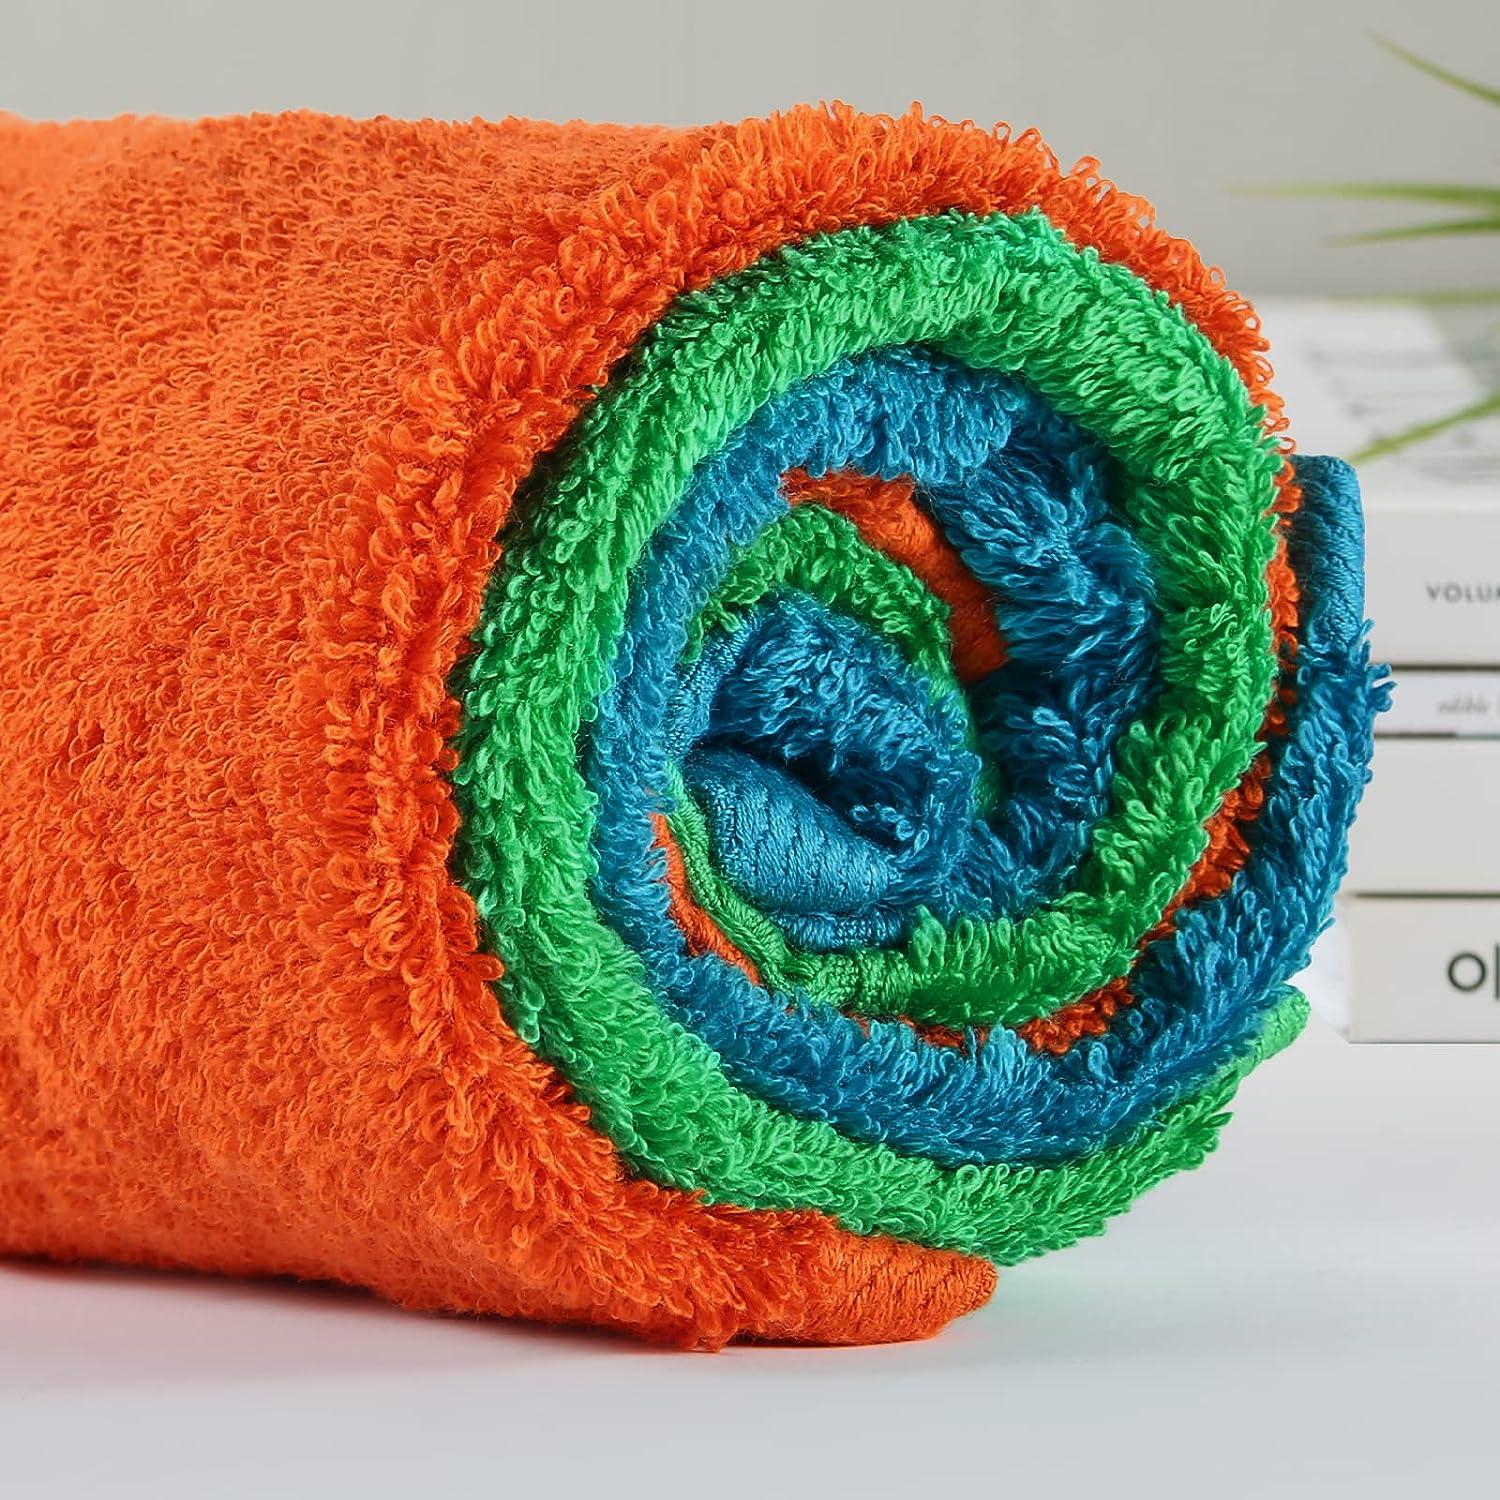 Chiicol Cotton Wash Cloths Absorbent Bath Washcloths for Body and Face -  Hotel Towels for Bathroom in Bulk. Durable Soft Bath Rags Wash Rag  (Multicolor)